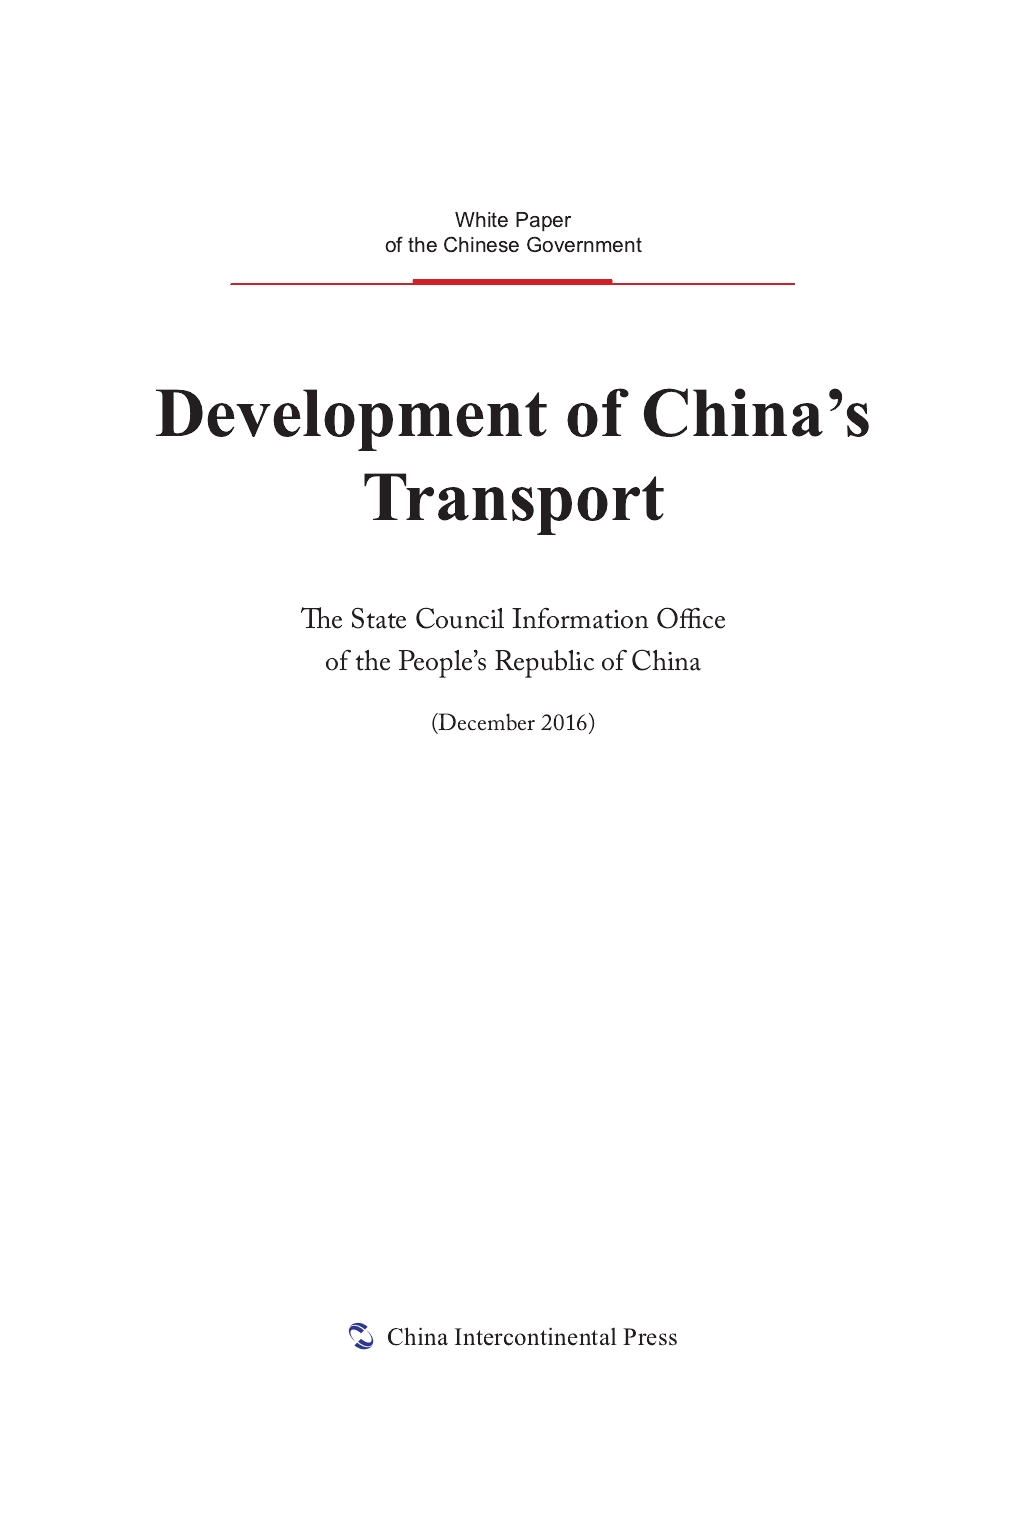 Development of China's Transport